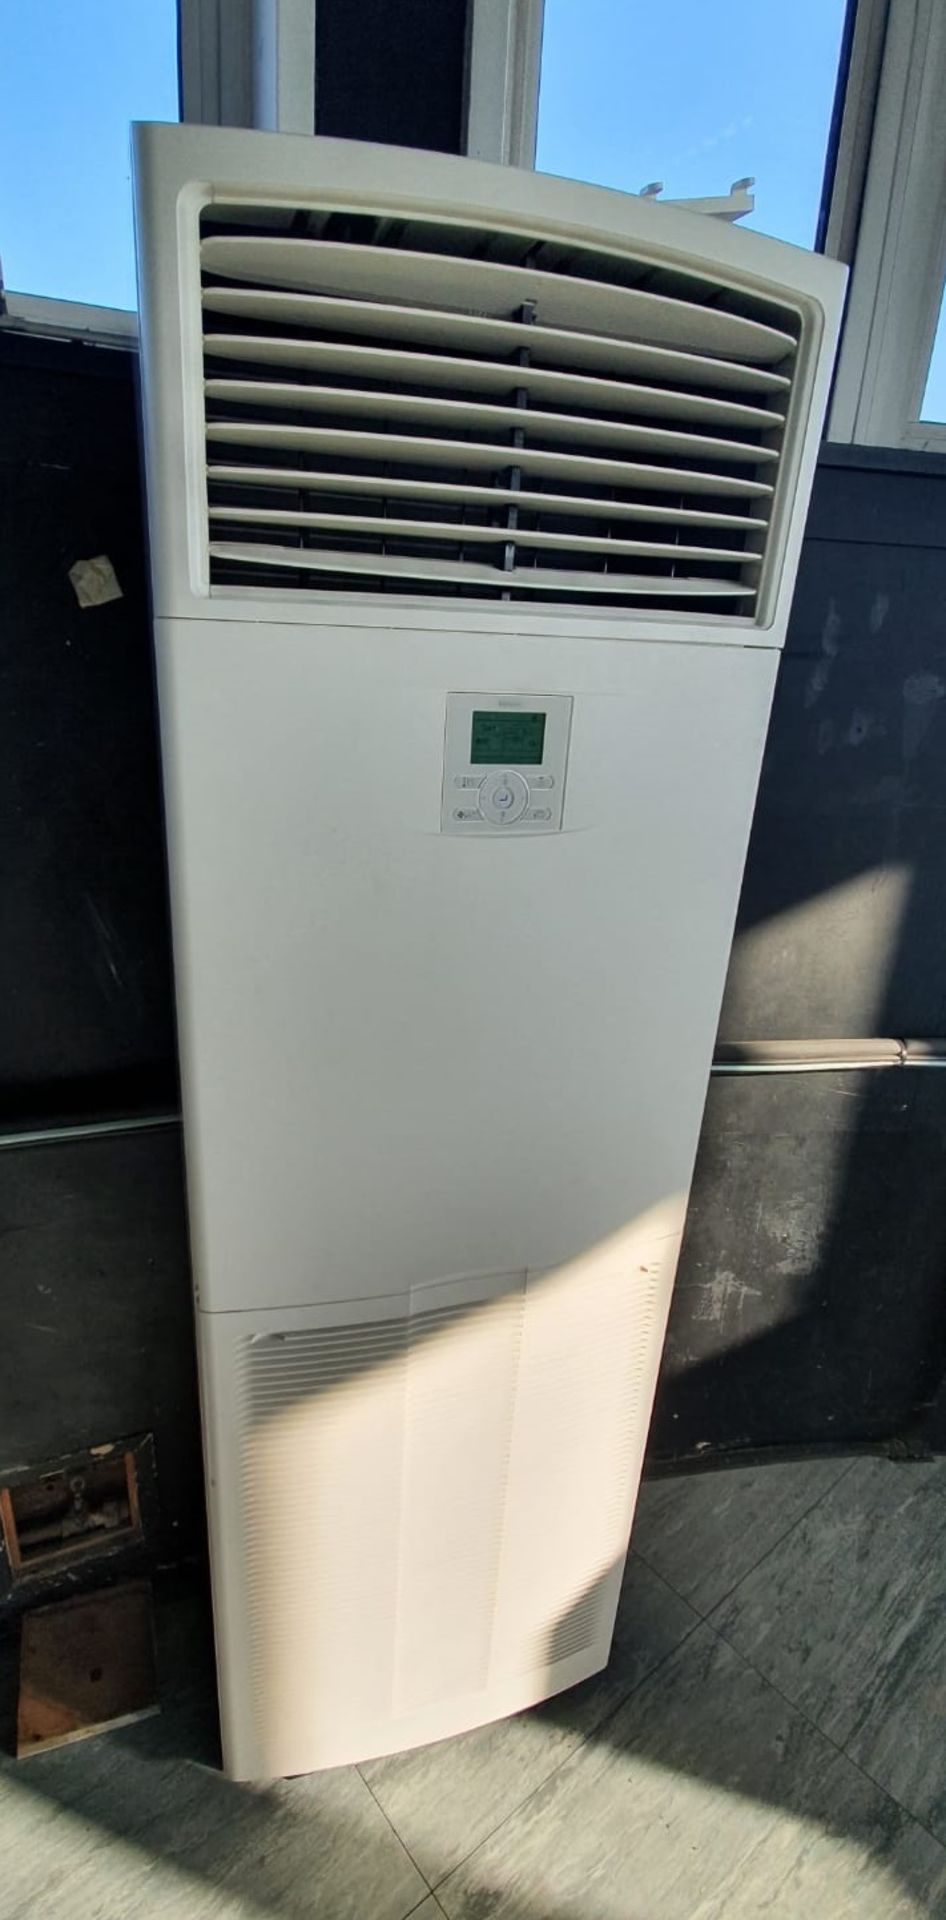 1 x Daikin Floor Mounted Indoor Seasonal Smart Inverter For Cooling / Heating - Single Phase